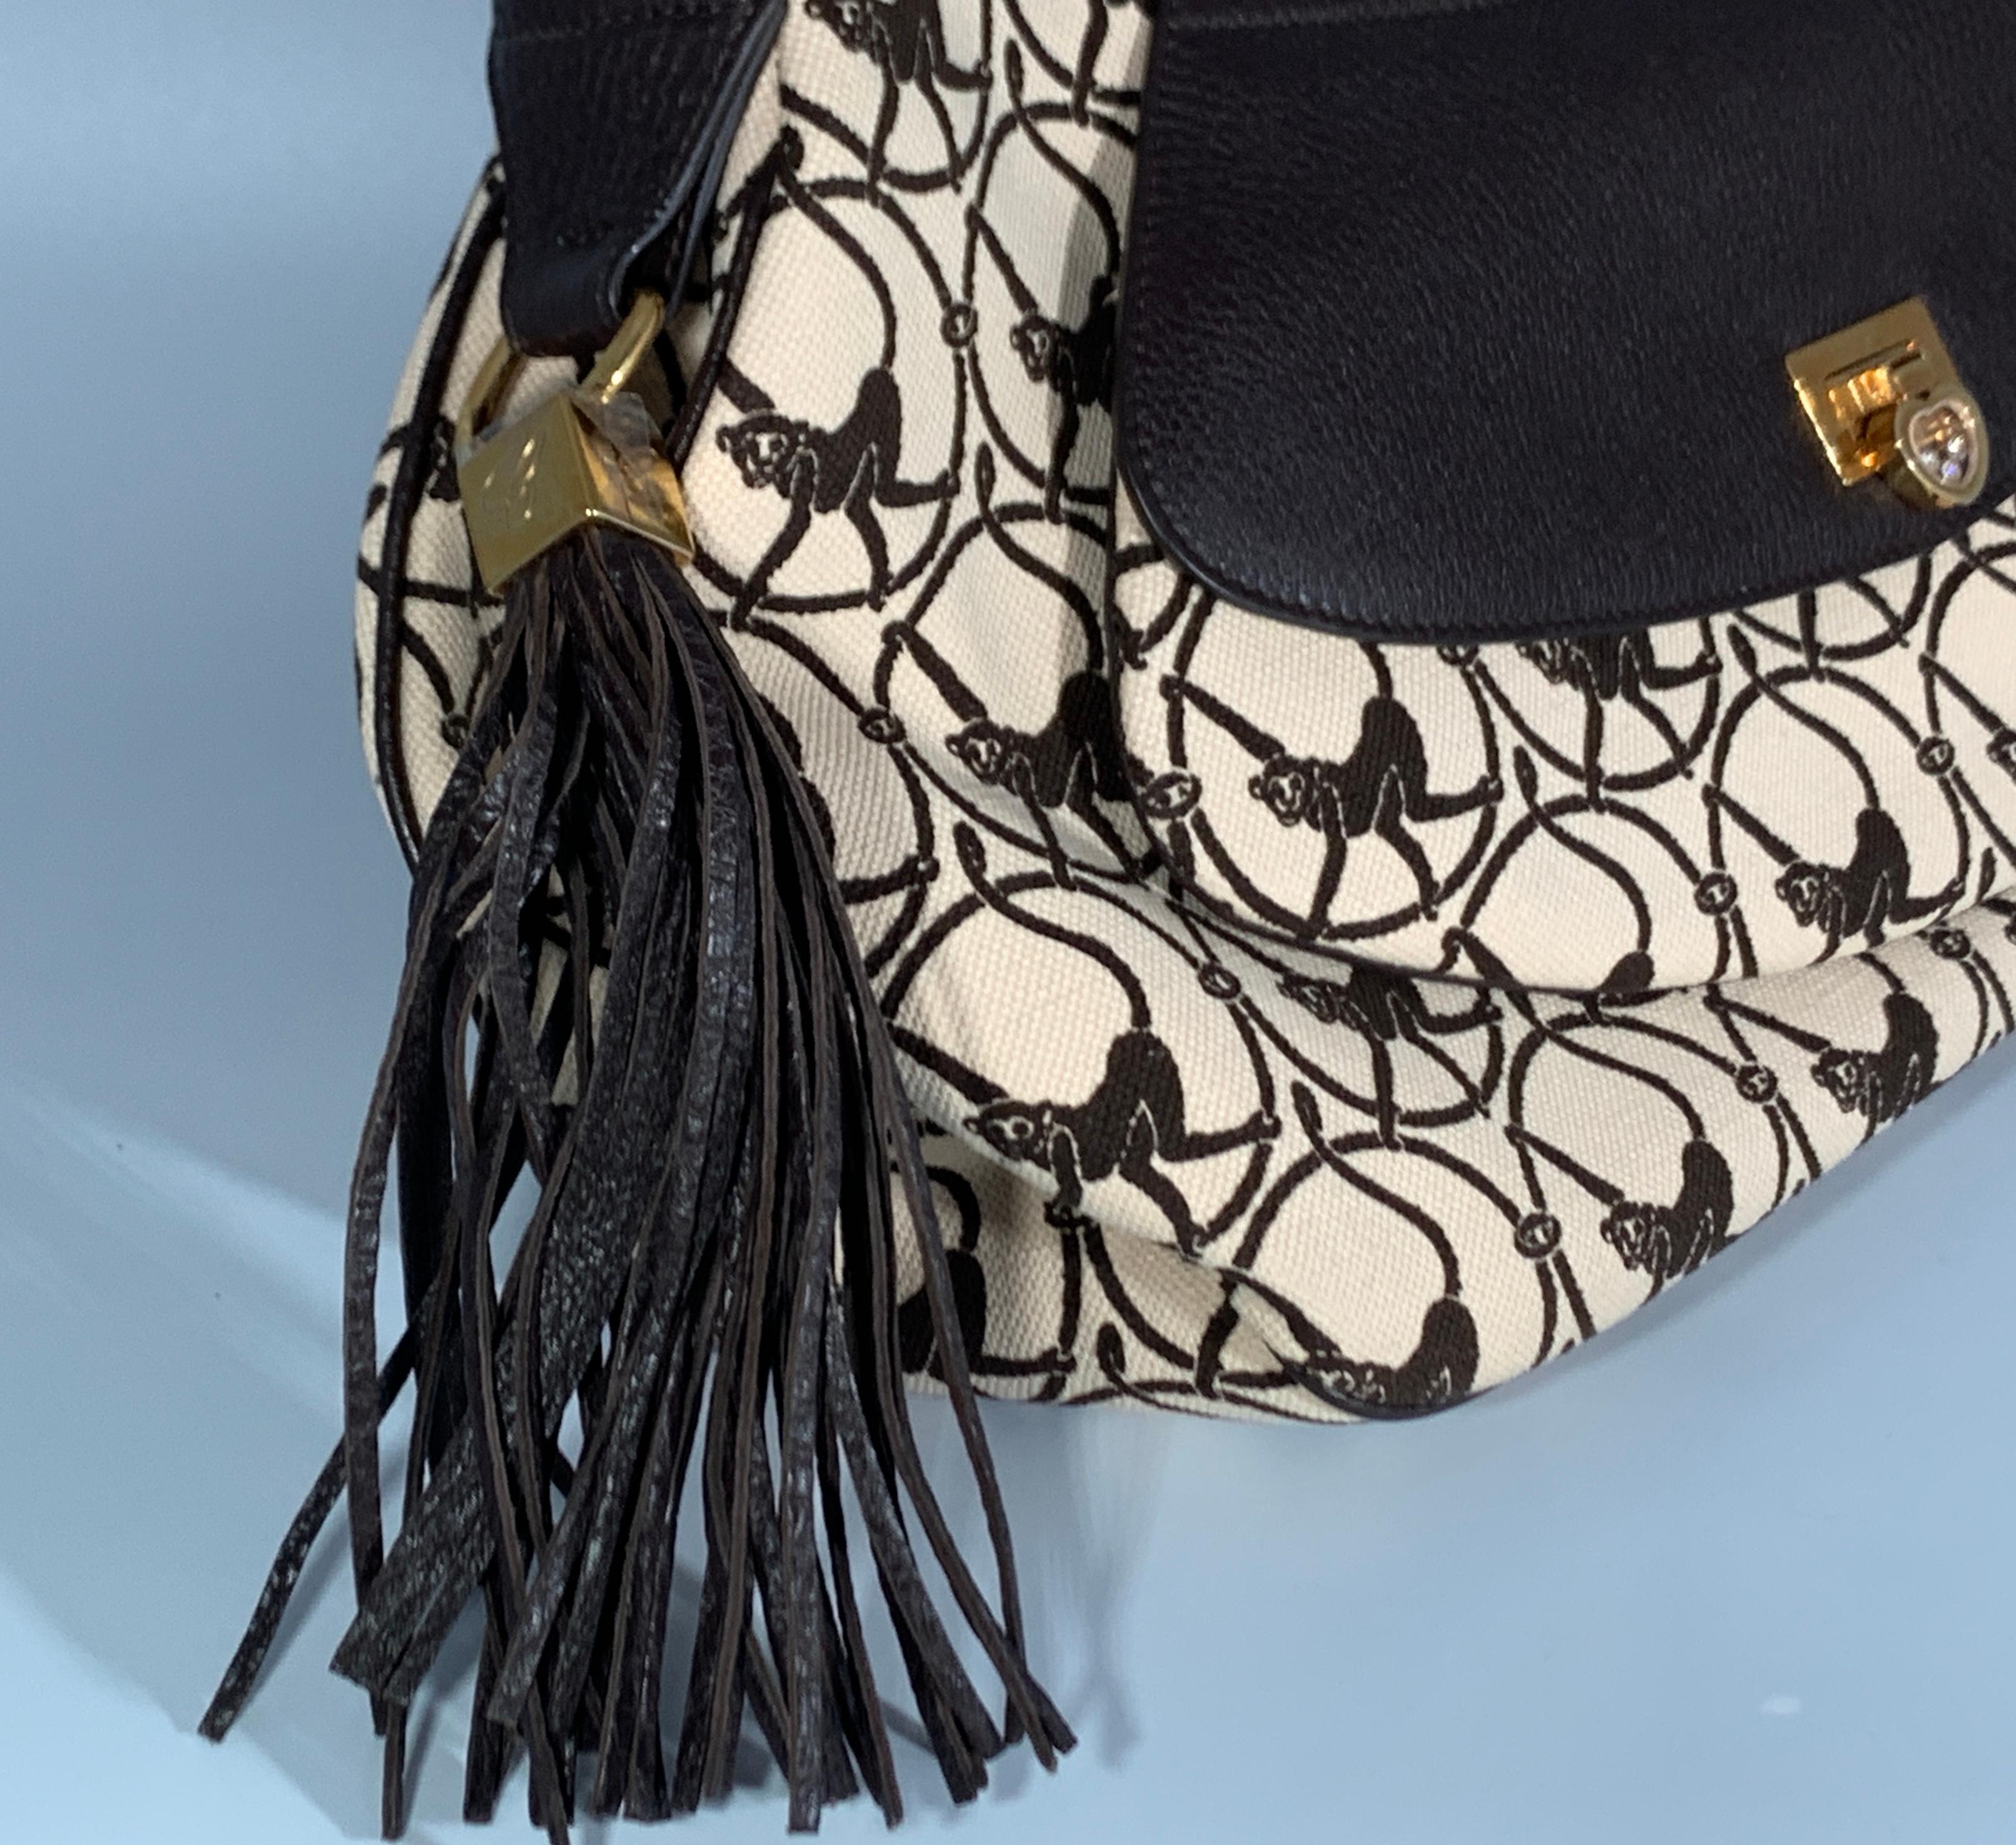 Black Chopard Madrid Beidge / Camel Color Calfskin & Leather Bag, Brand New